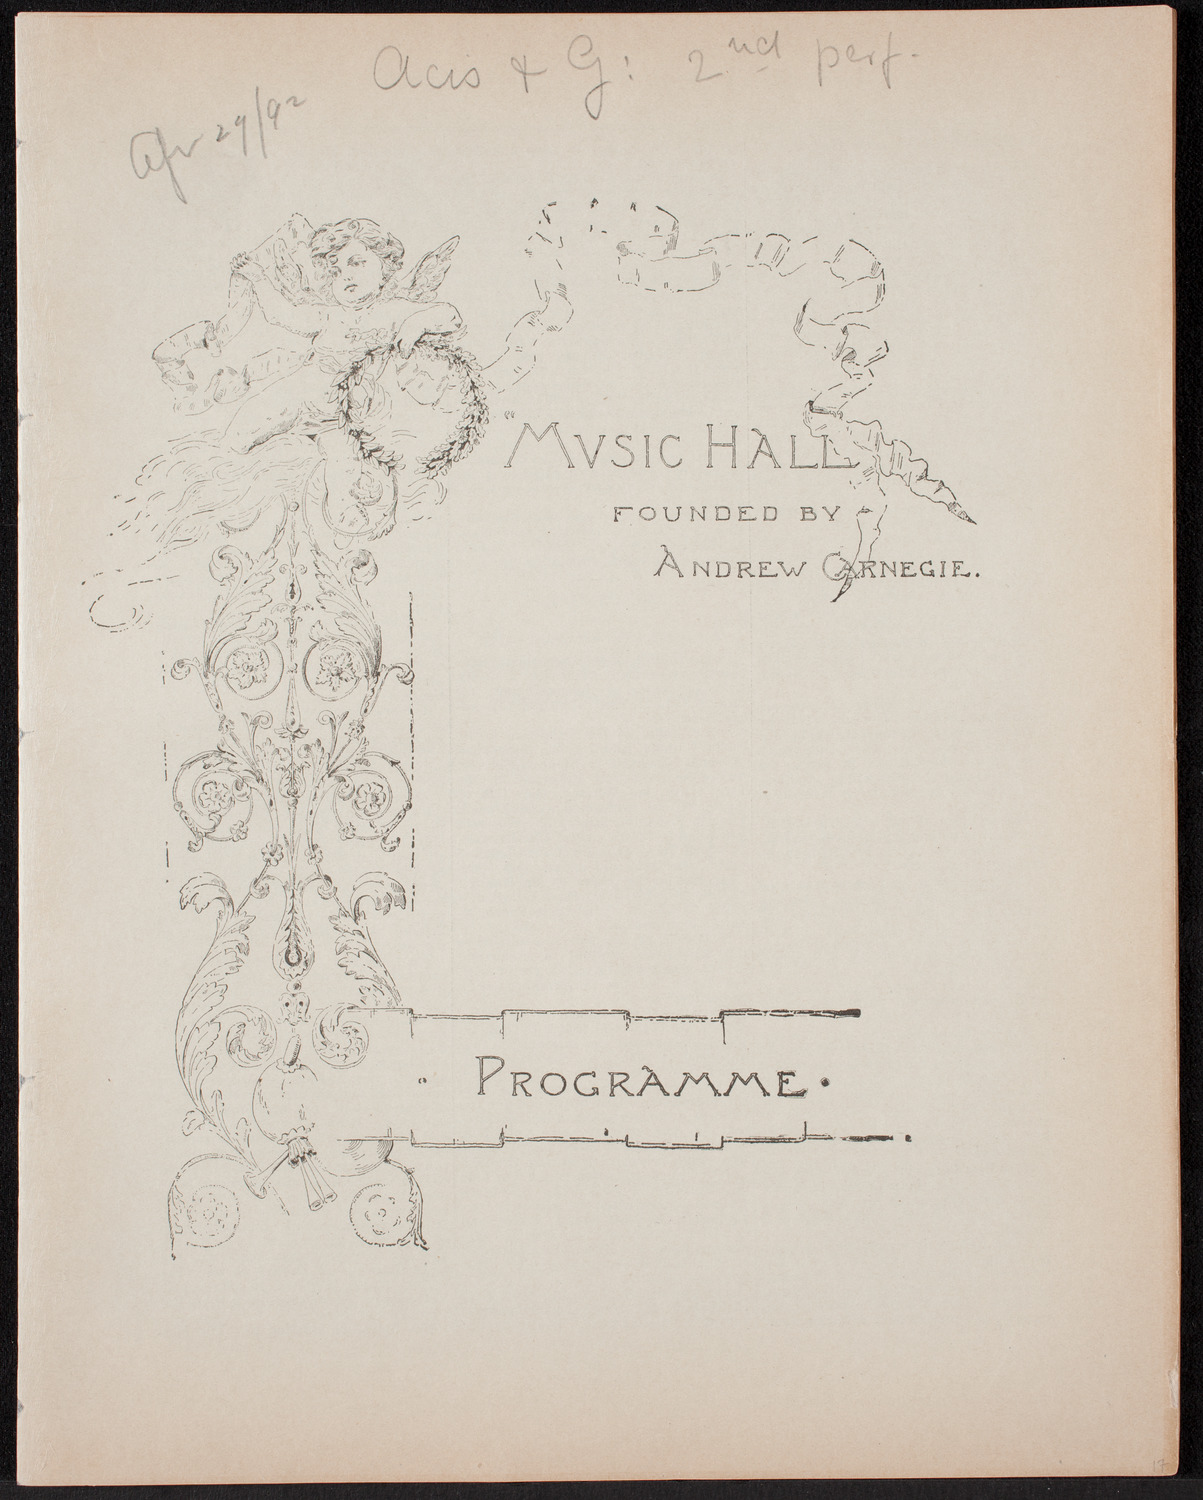 New York Symphony Orchestra: Handel Festival, April 29, 1892, program page 1